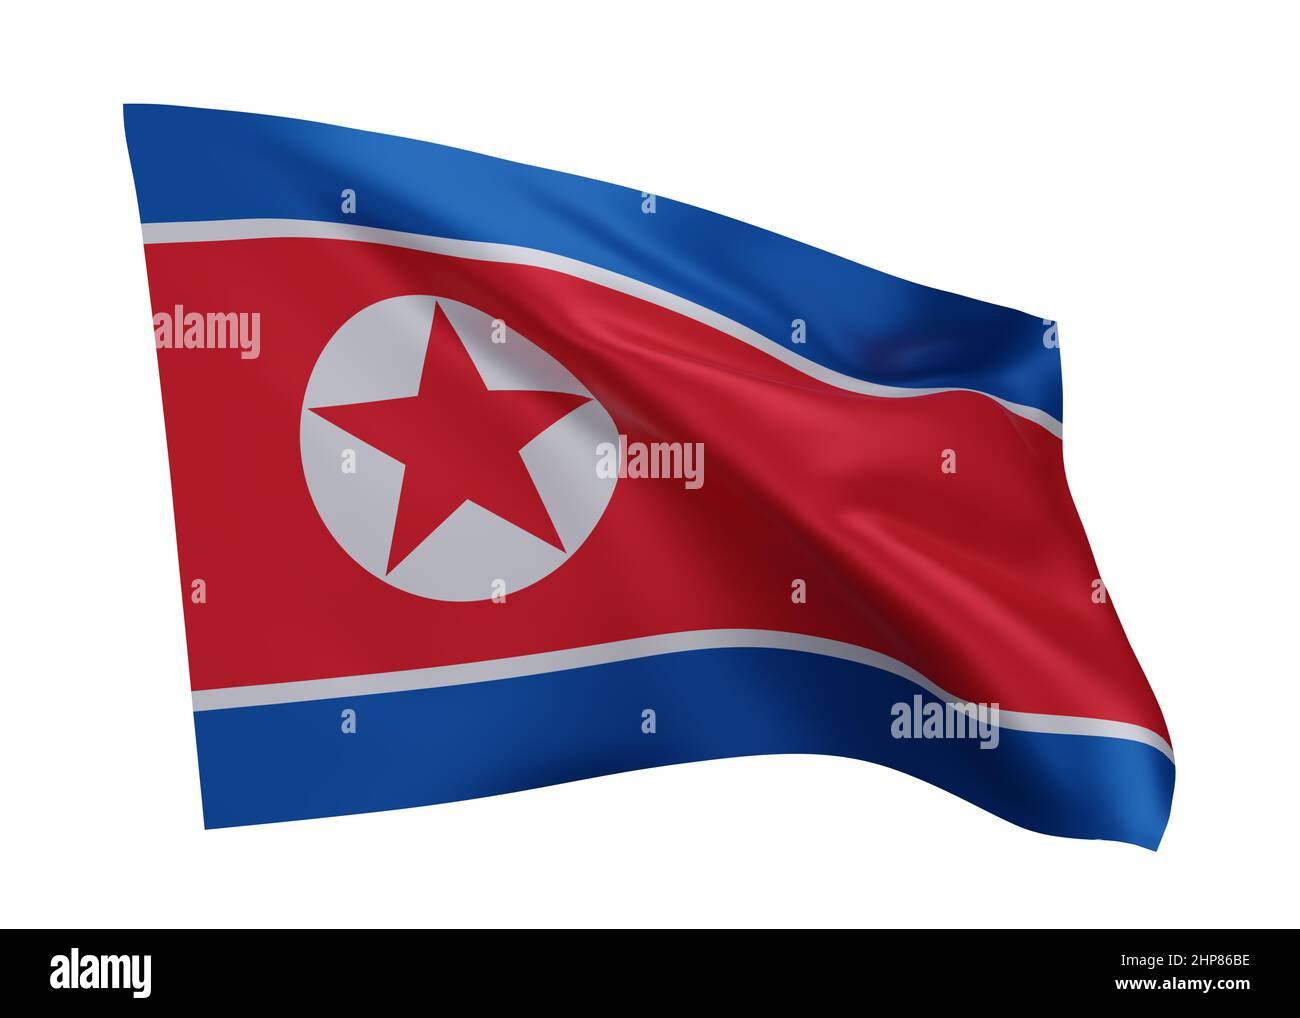 3d illustration flag of North Korea. North Korean high resolution flag isolated against white background. 3d rendering Stock Photo